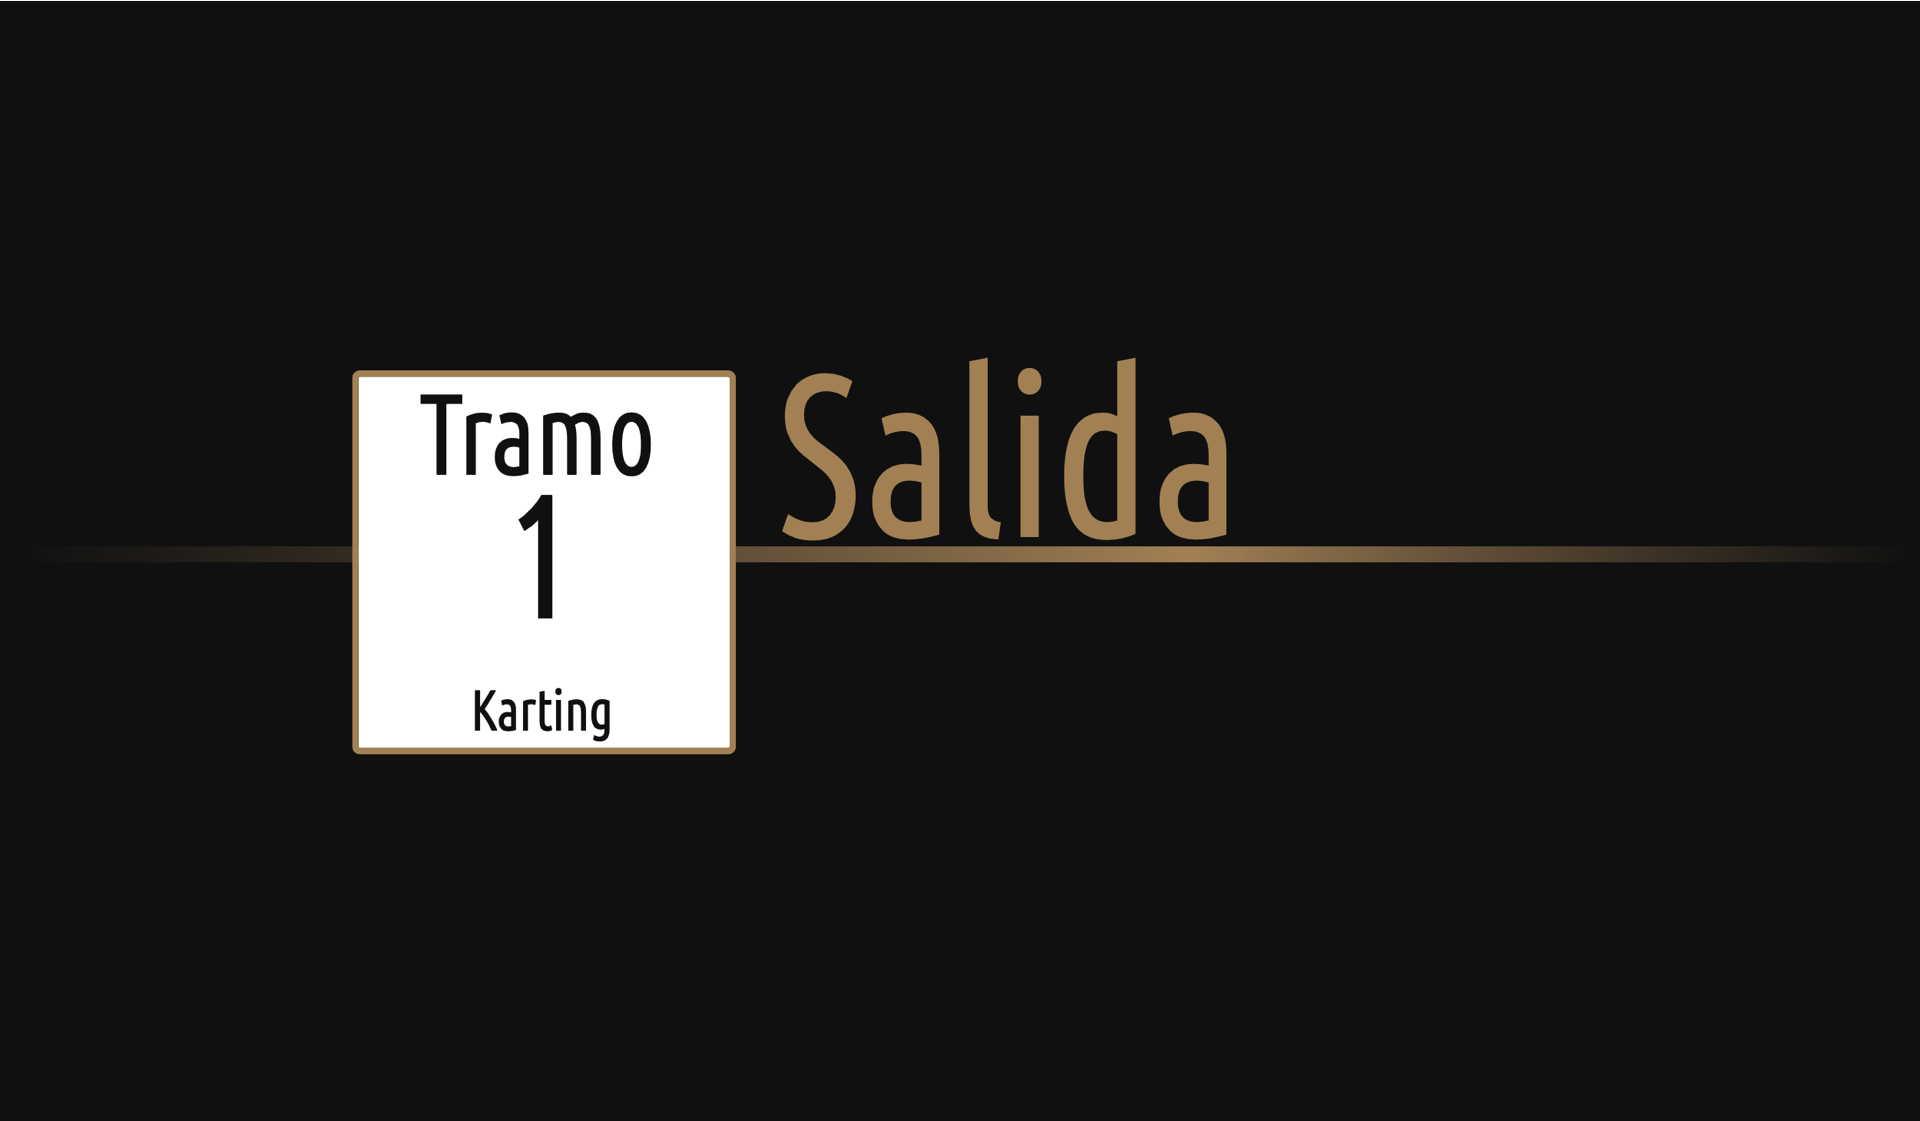 Tramo 1 › Karting